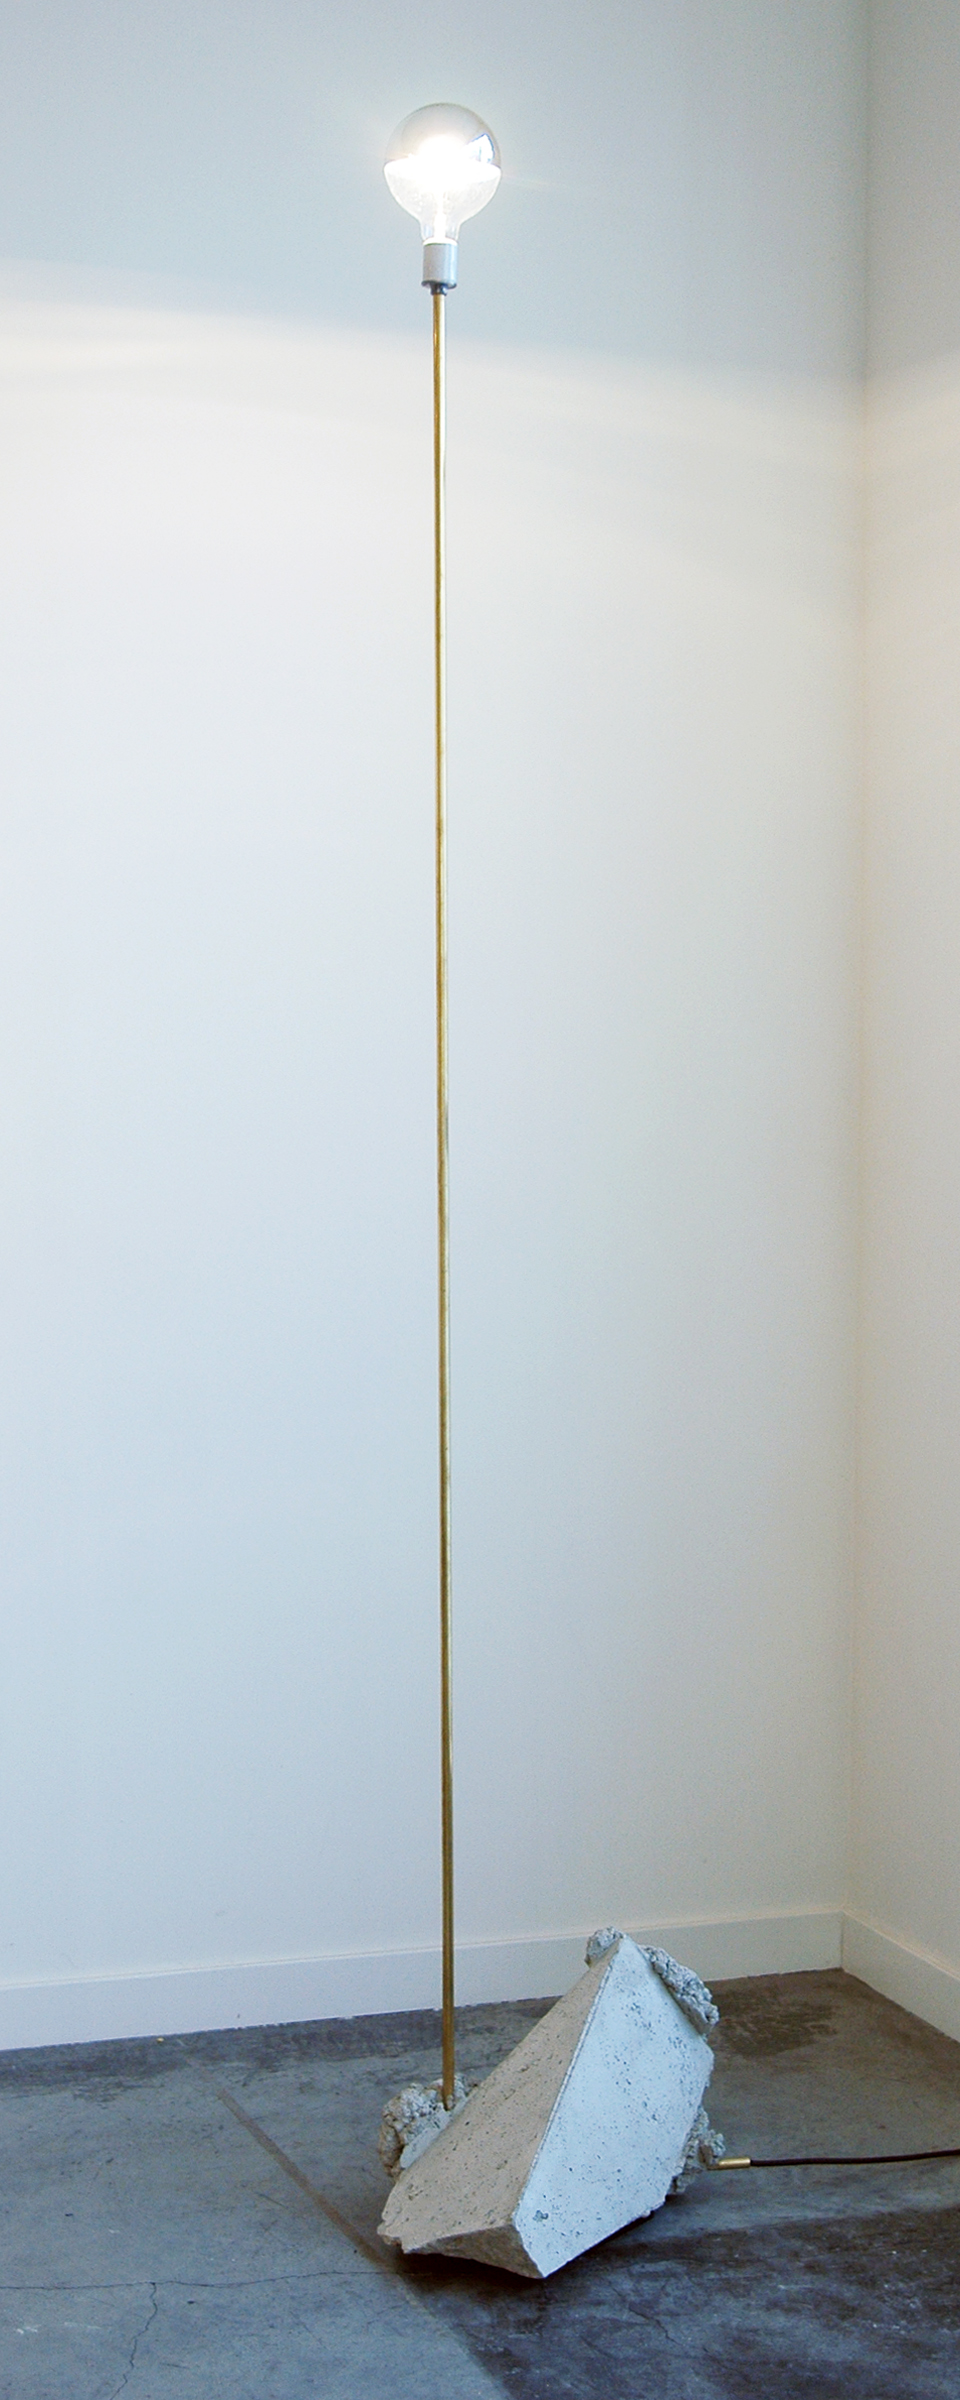   JONATHAN RUNCIO   Cast-off lamp 02 , brass, concrete, wiring, half crome light bulb, 90" x 18.5" x 11", 2013 